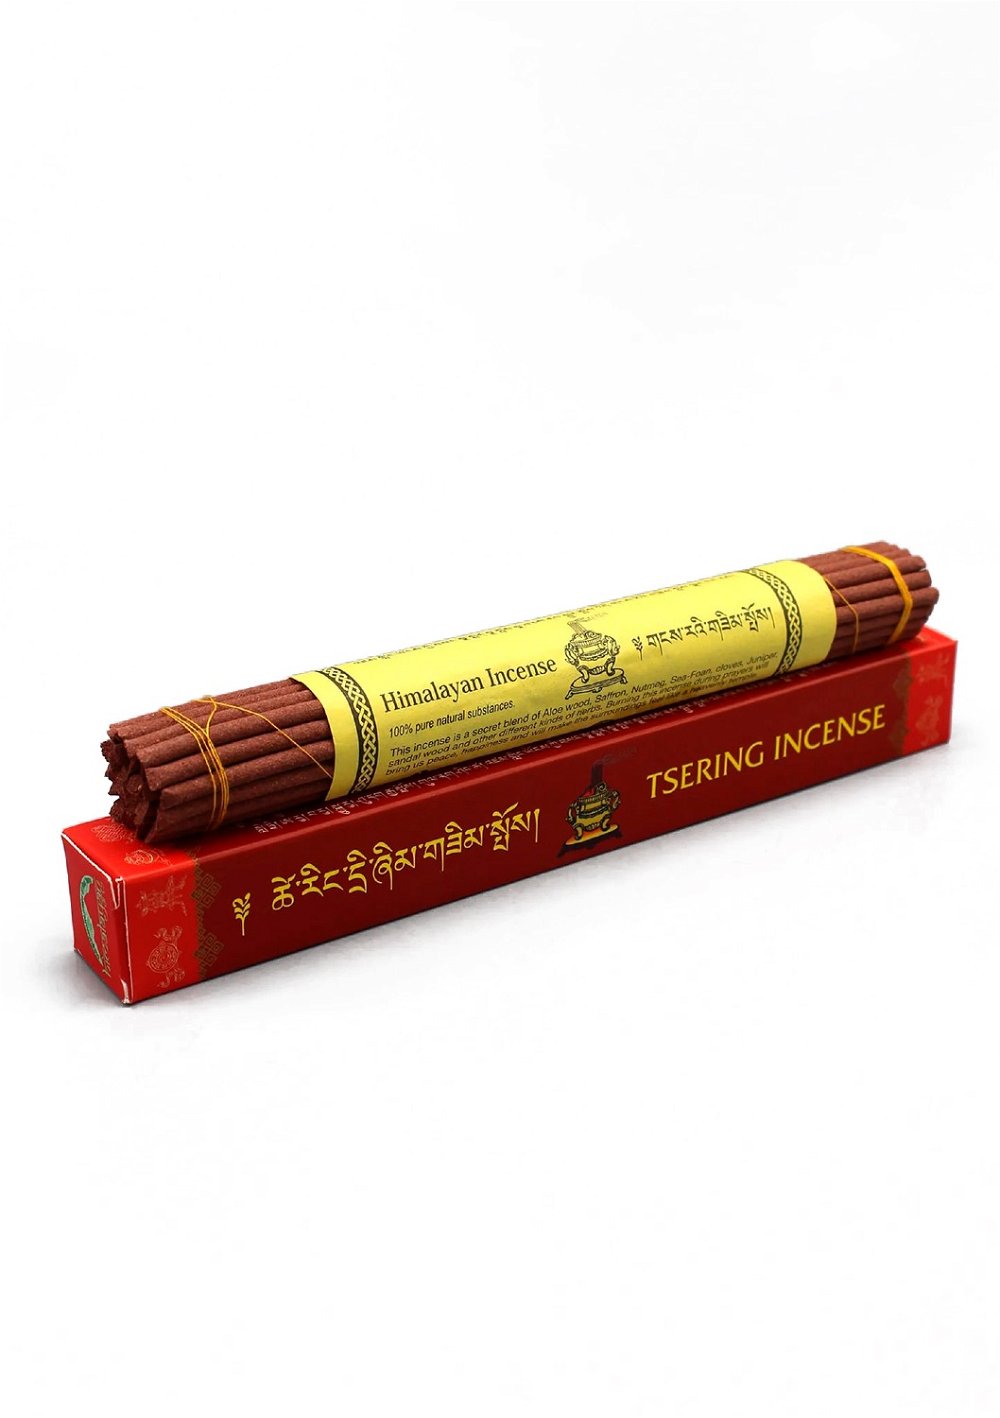 Благовоние Tsering Incense (Церингма), красная упаковка, 30 палочек по 21,5 см, 30, Tsering, красная упаковка, 